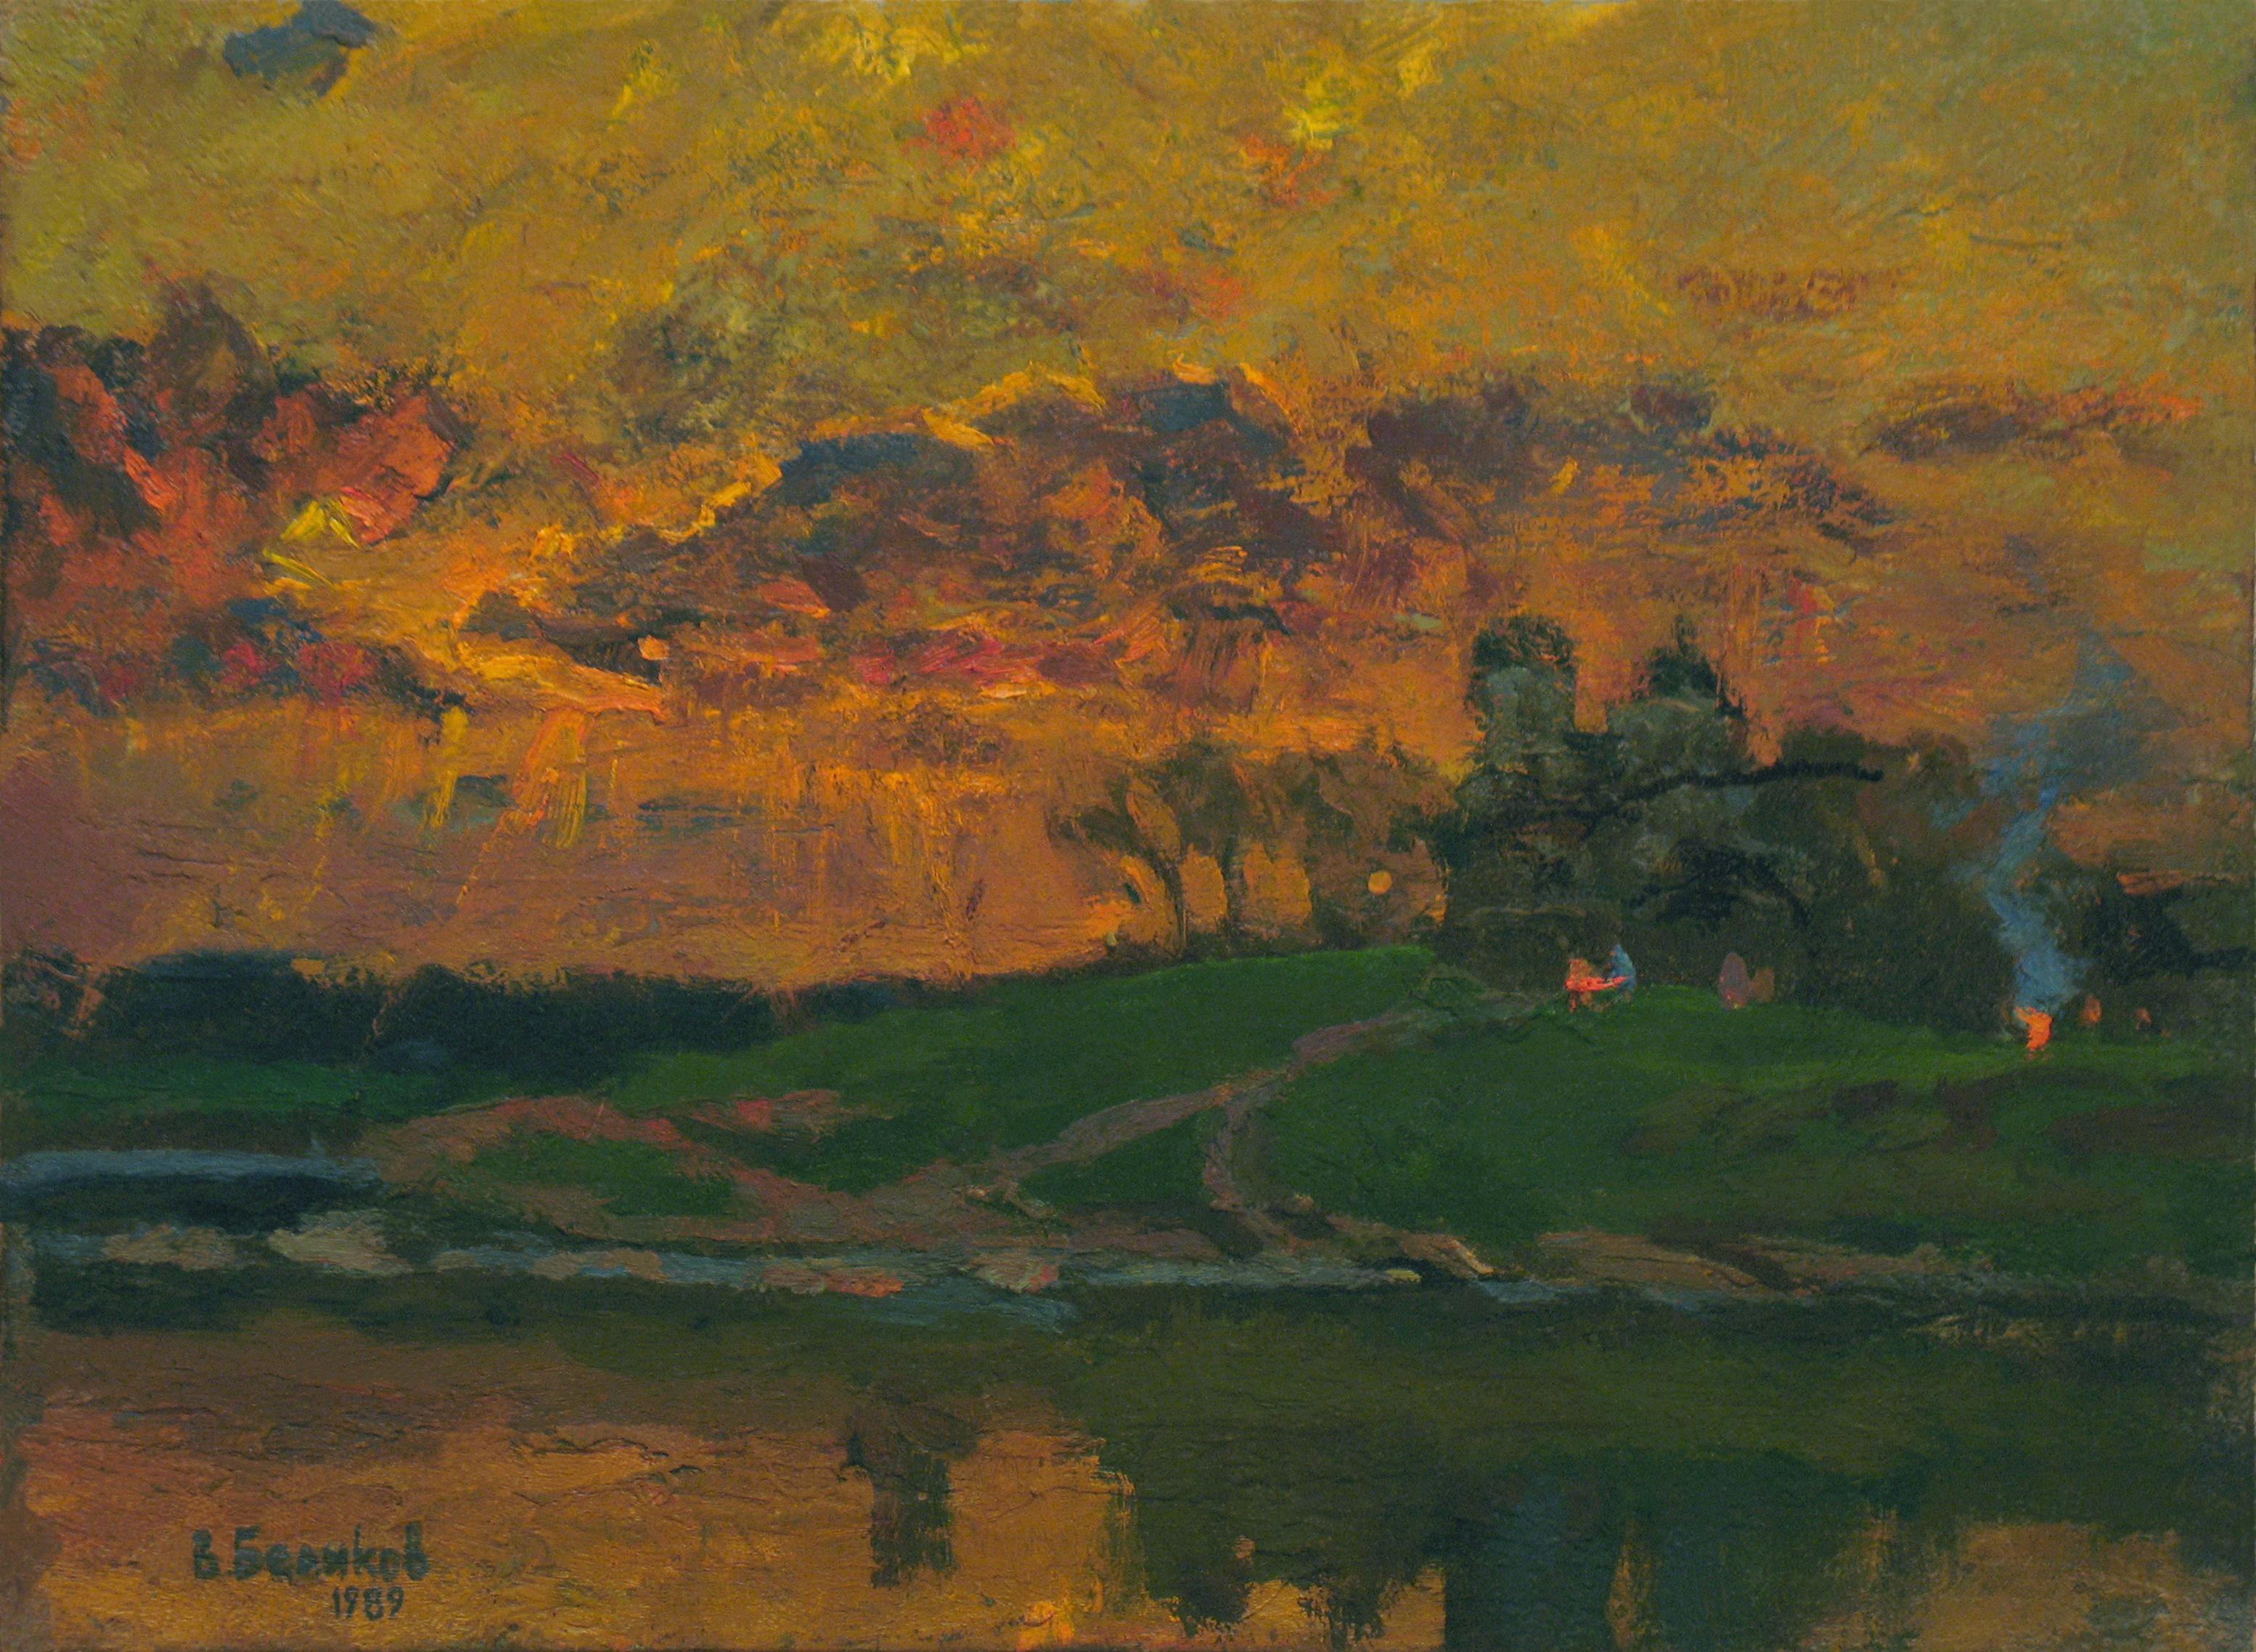 Fires across the river. Original modern art painting